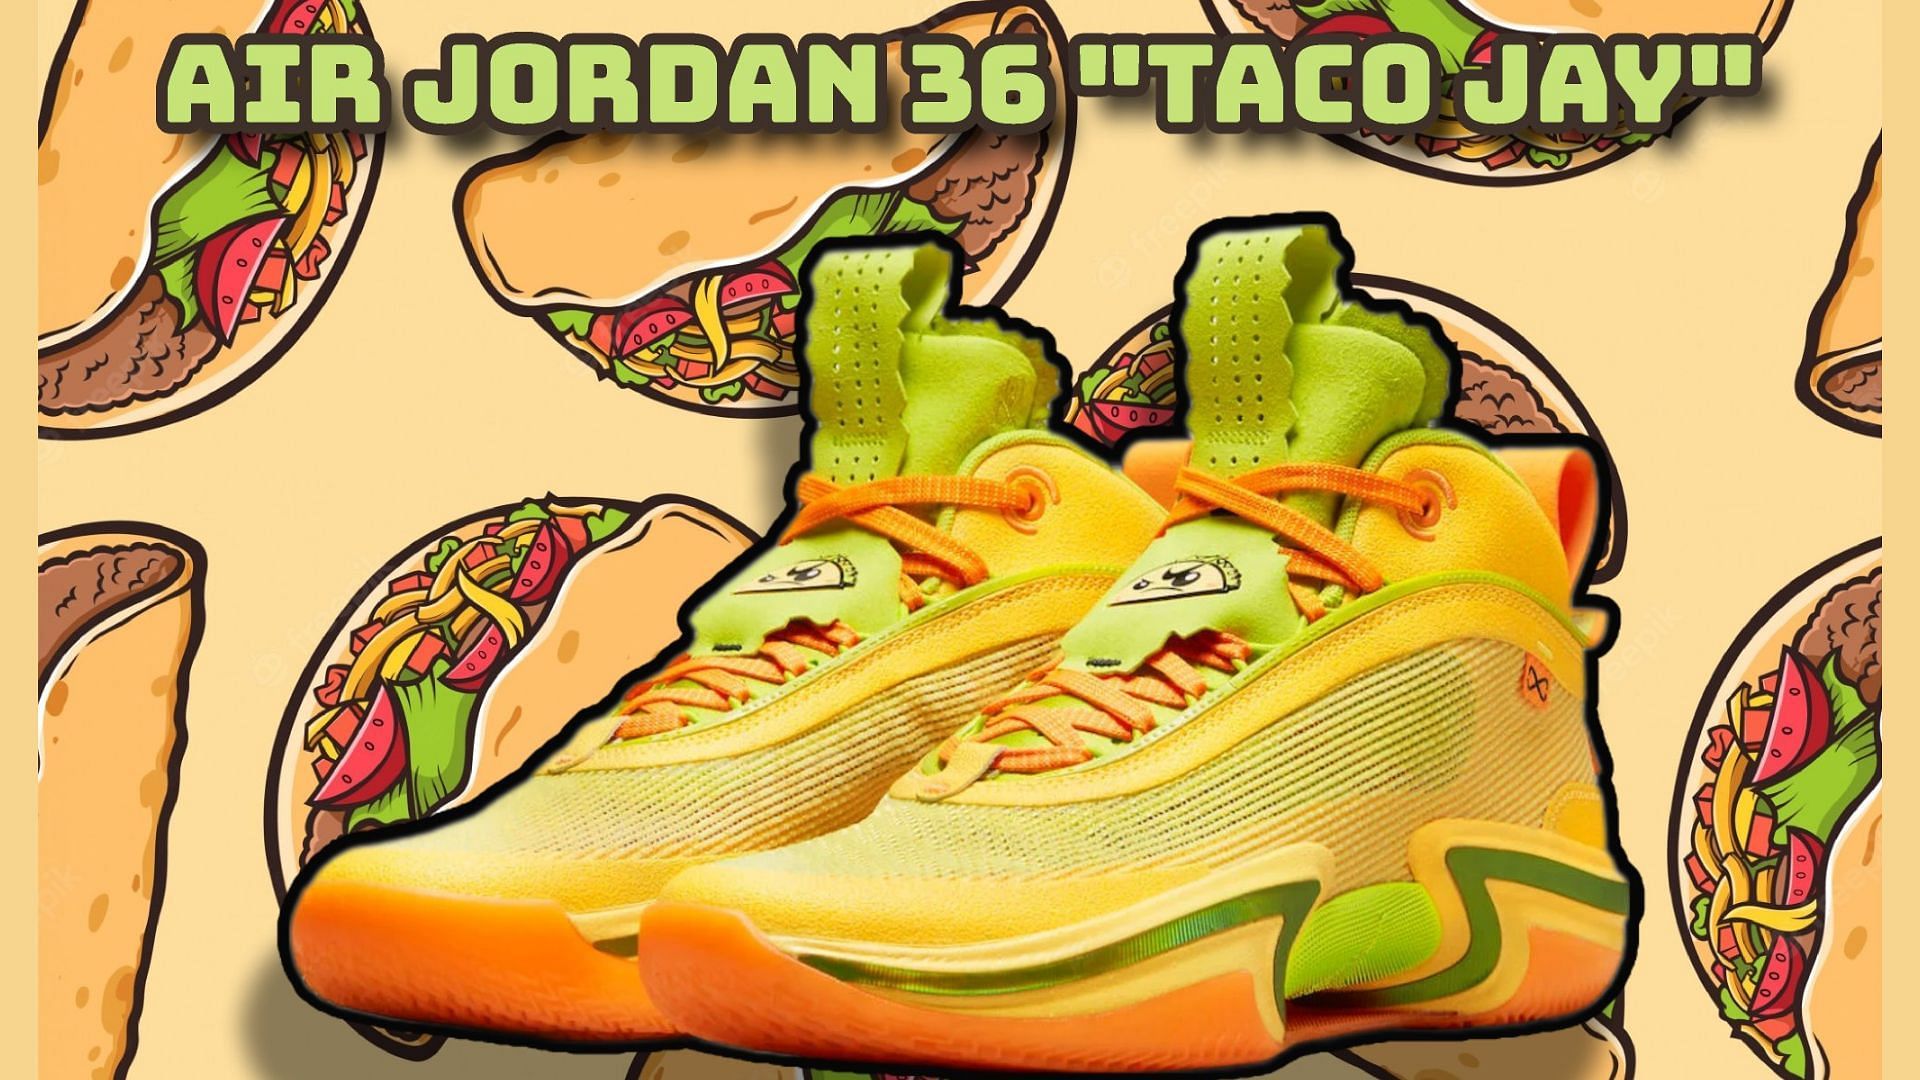 Air Jordan 9 Taco Jay special edition shoes (Image via Twitter/@fanofbasketbal2)